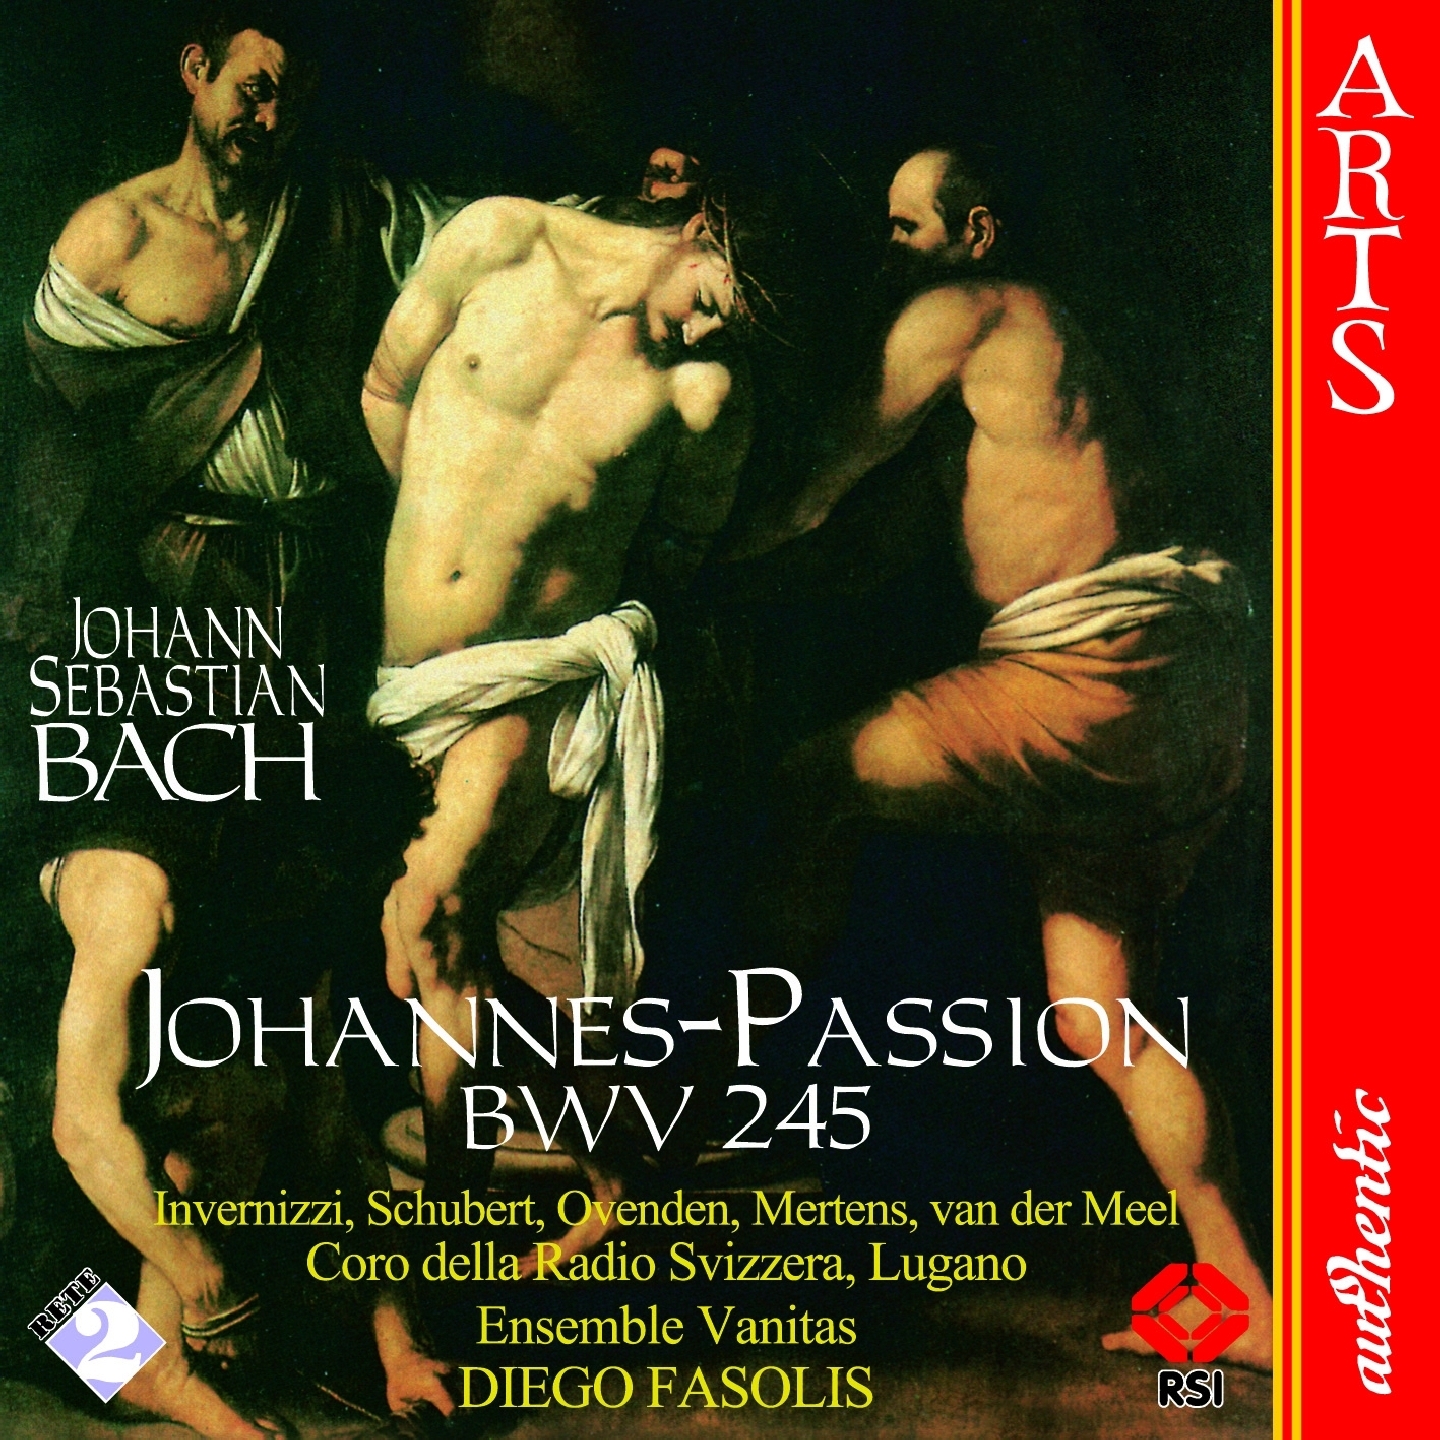 JohannesPassion, BWV 245, Part I: 4. Recitative " Auf dass das Wort erfü llet wü rde" Tenor, Bass